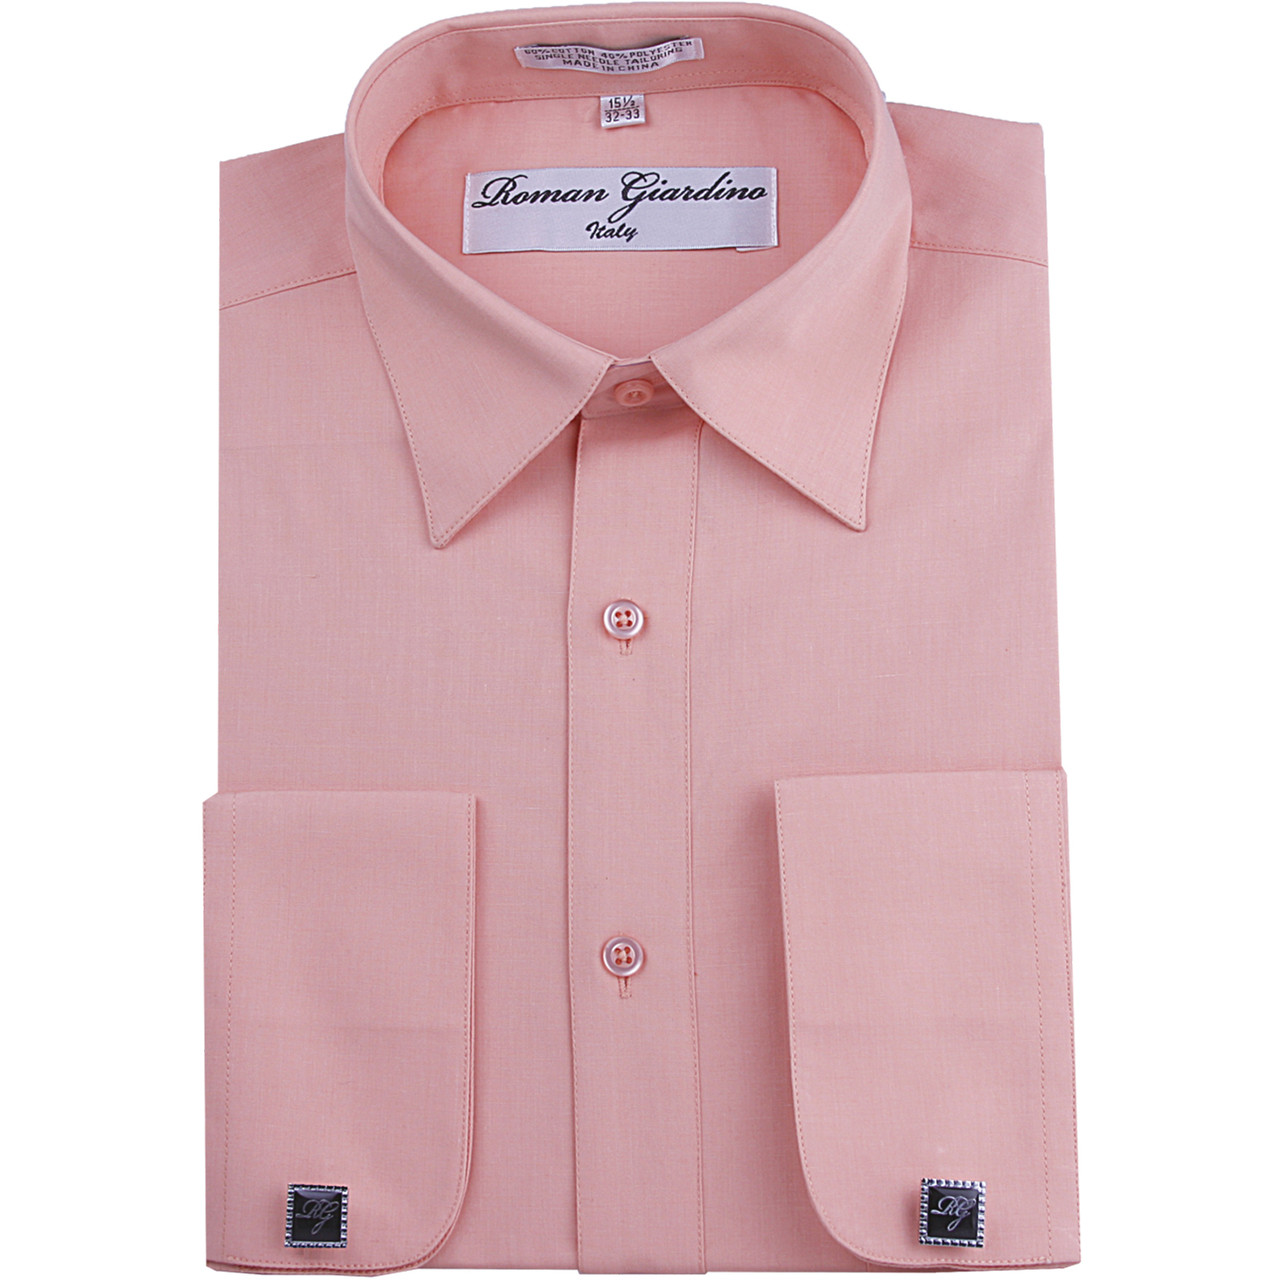 Roman Giardino | Men?€?s Cotton Dress Shirt Only $26 | Baby Pink